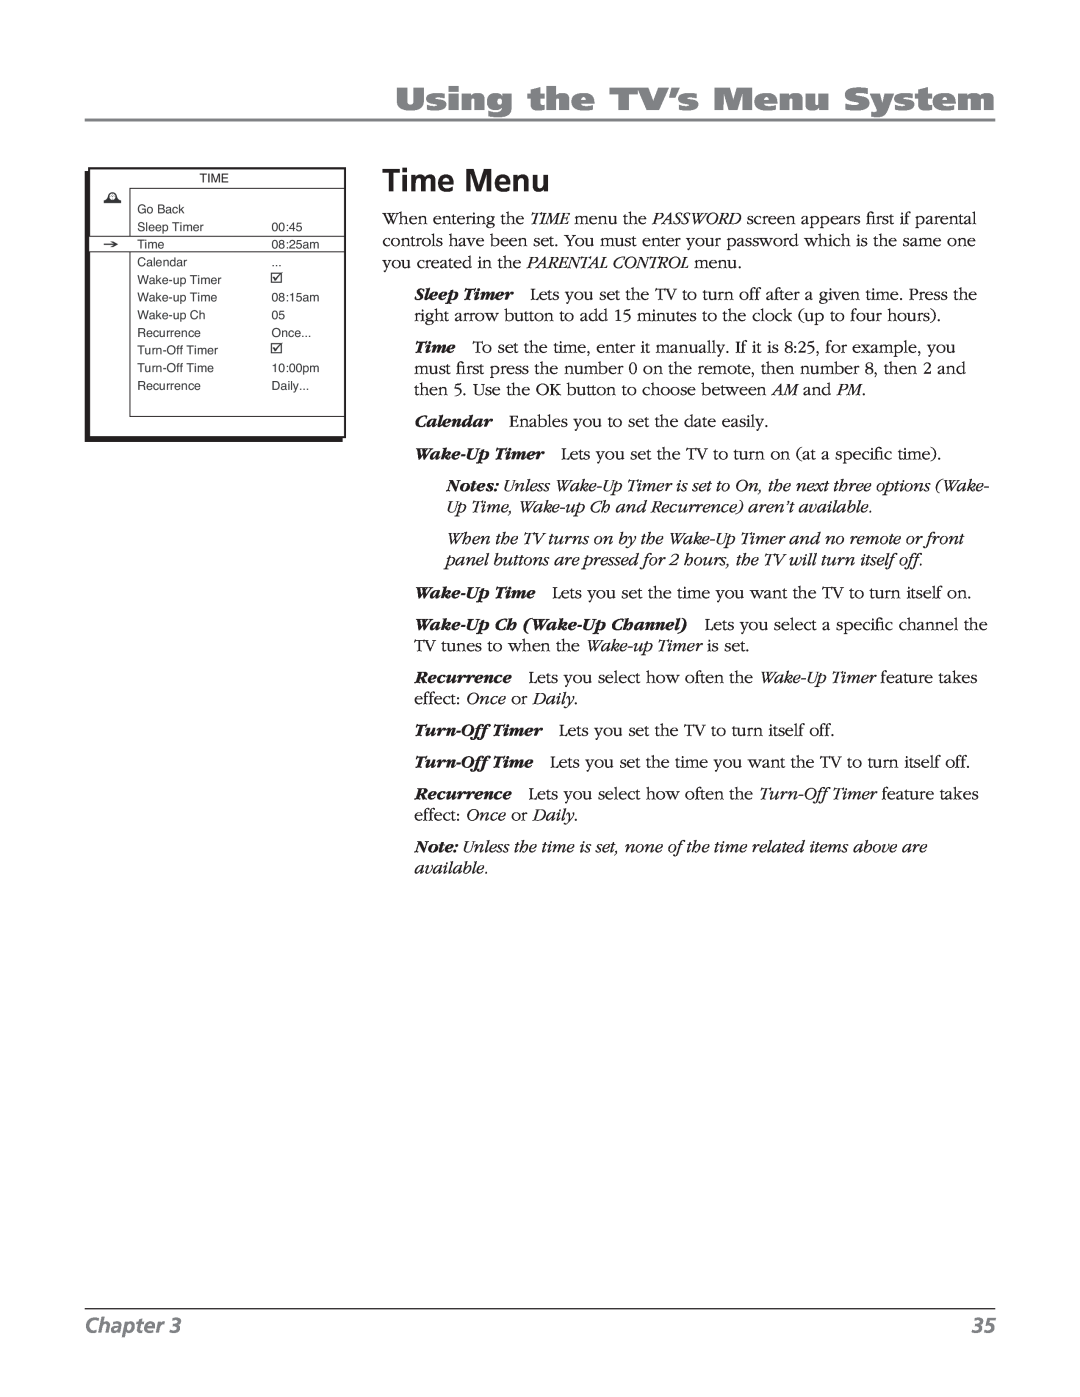 RCA 32v434t, 32V524T manual Time Menu, Using the TV’s Menu System, Chapter 